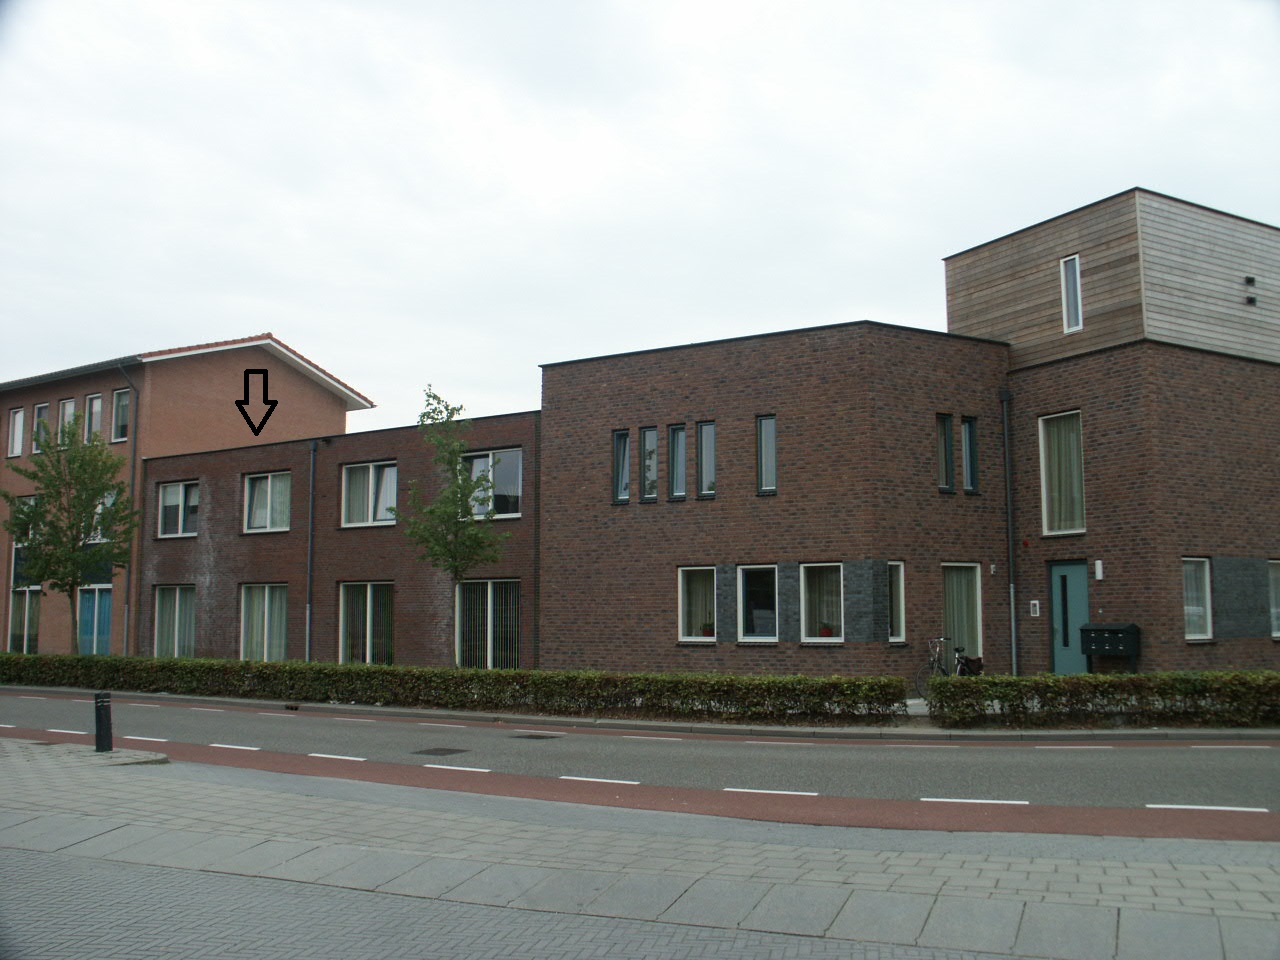 Nieuwstraat 13, 7151 CC Eibergen, Nederland